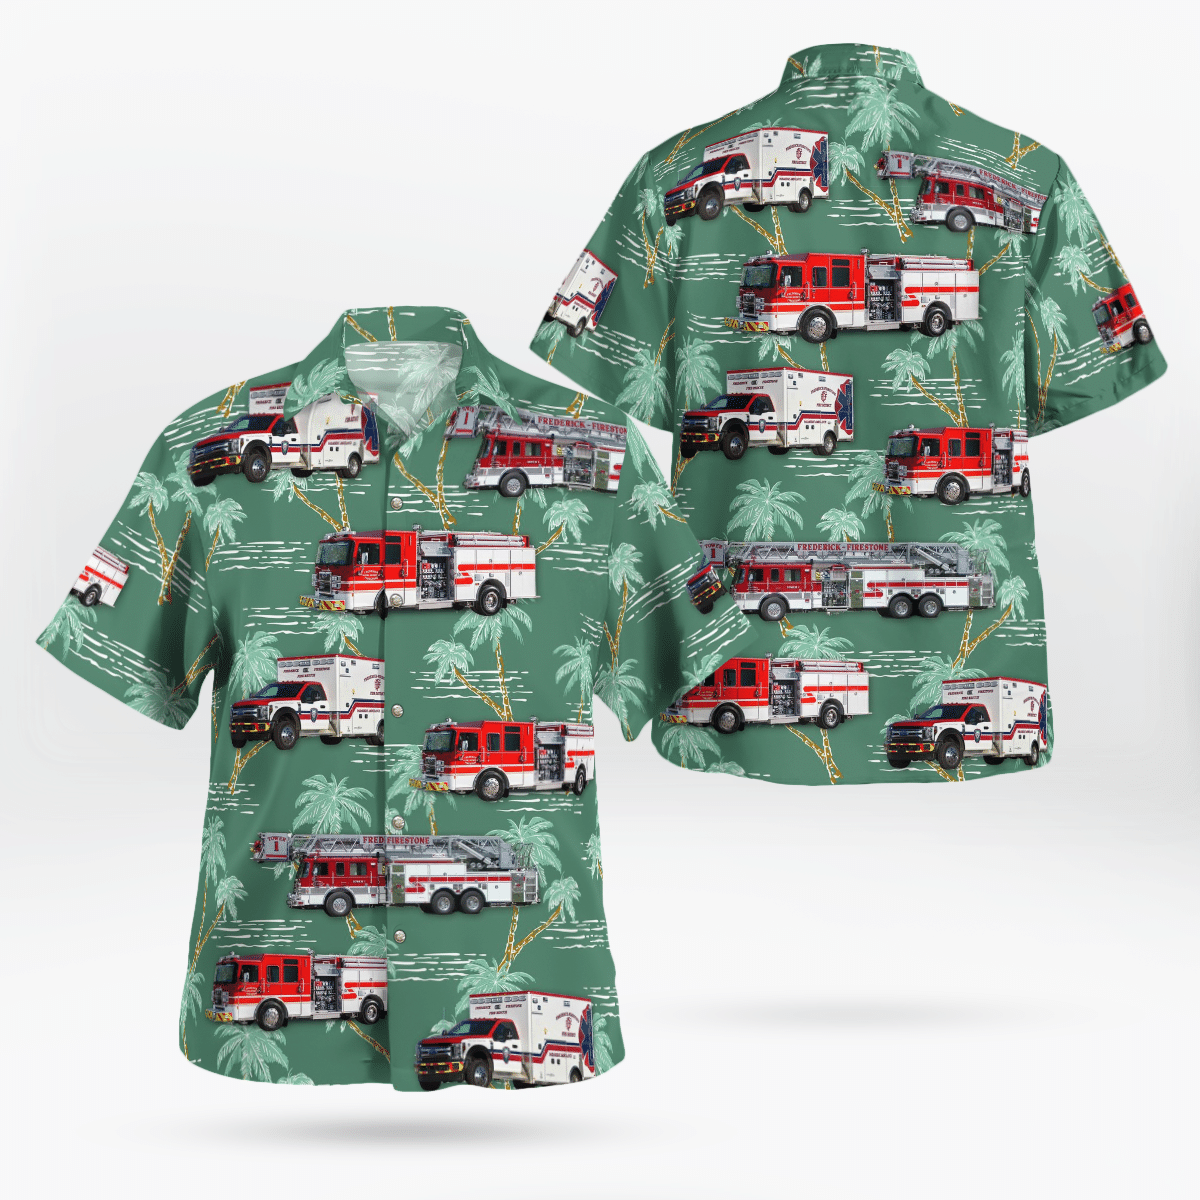 Listed below are some High-quality Aloha Shirt 467